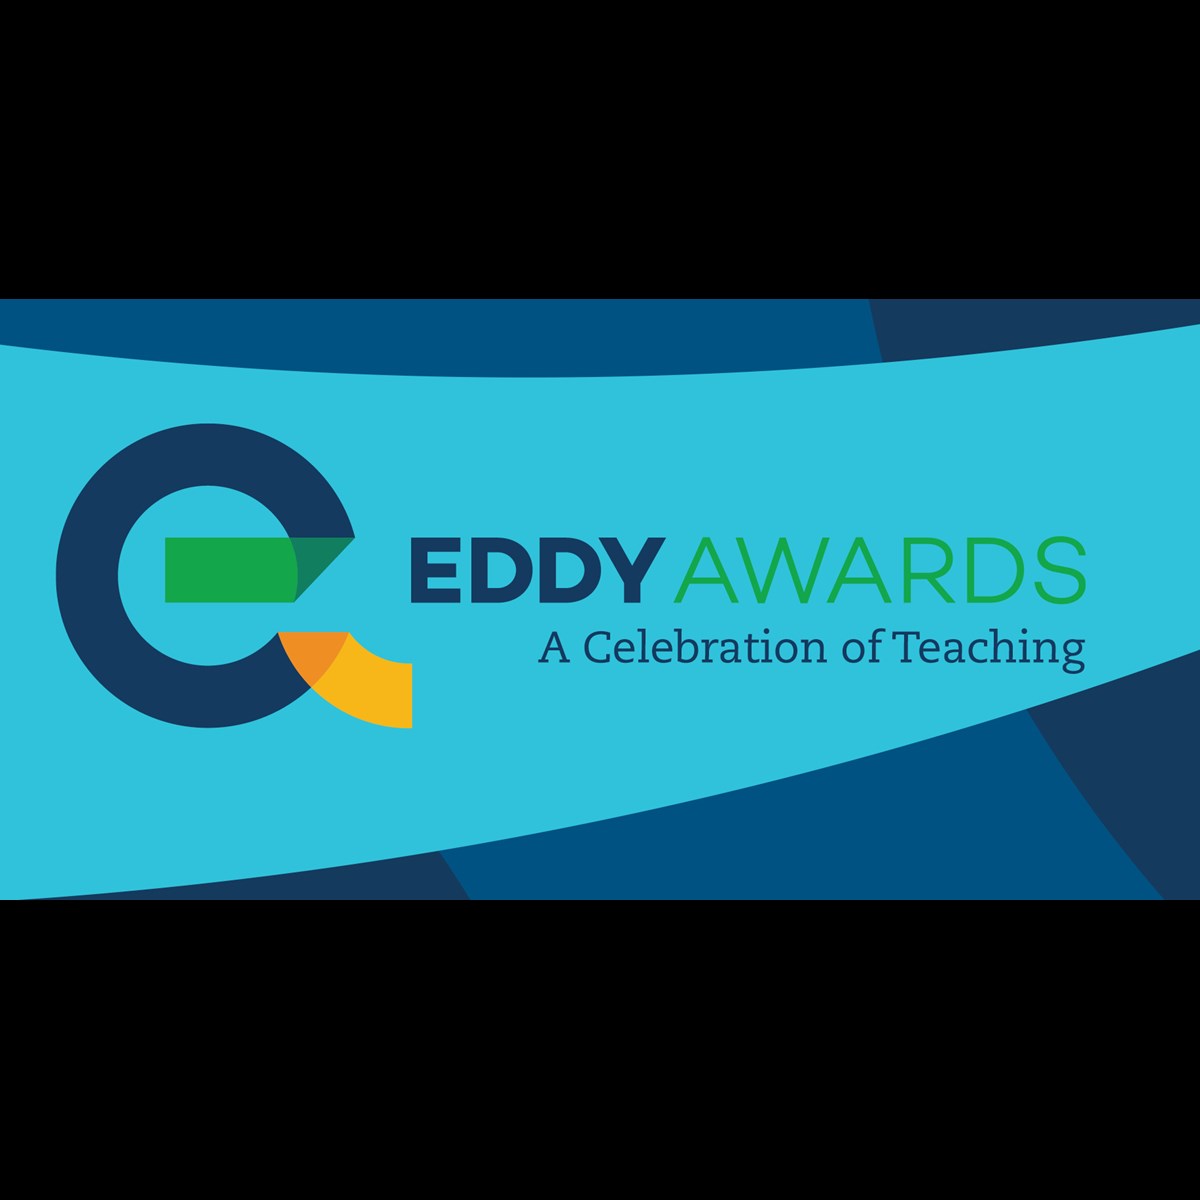 Eddy awards logo